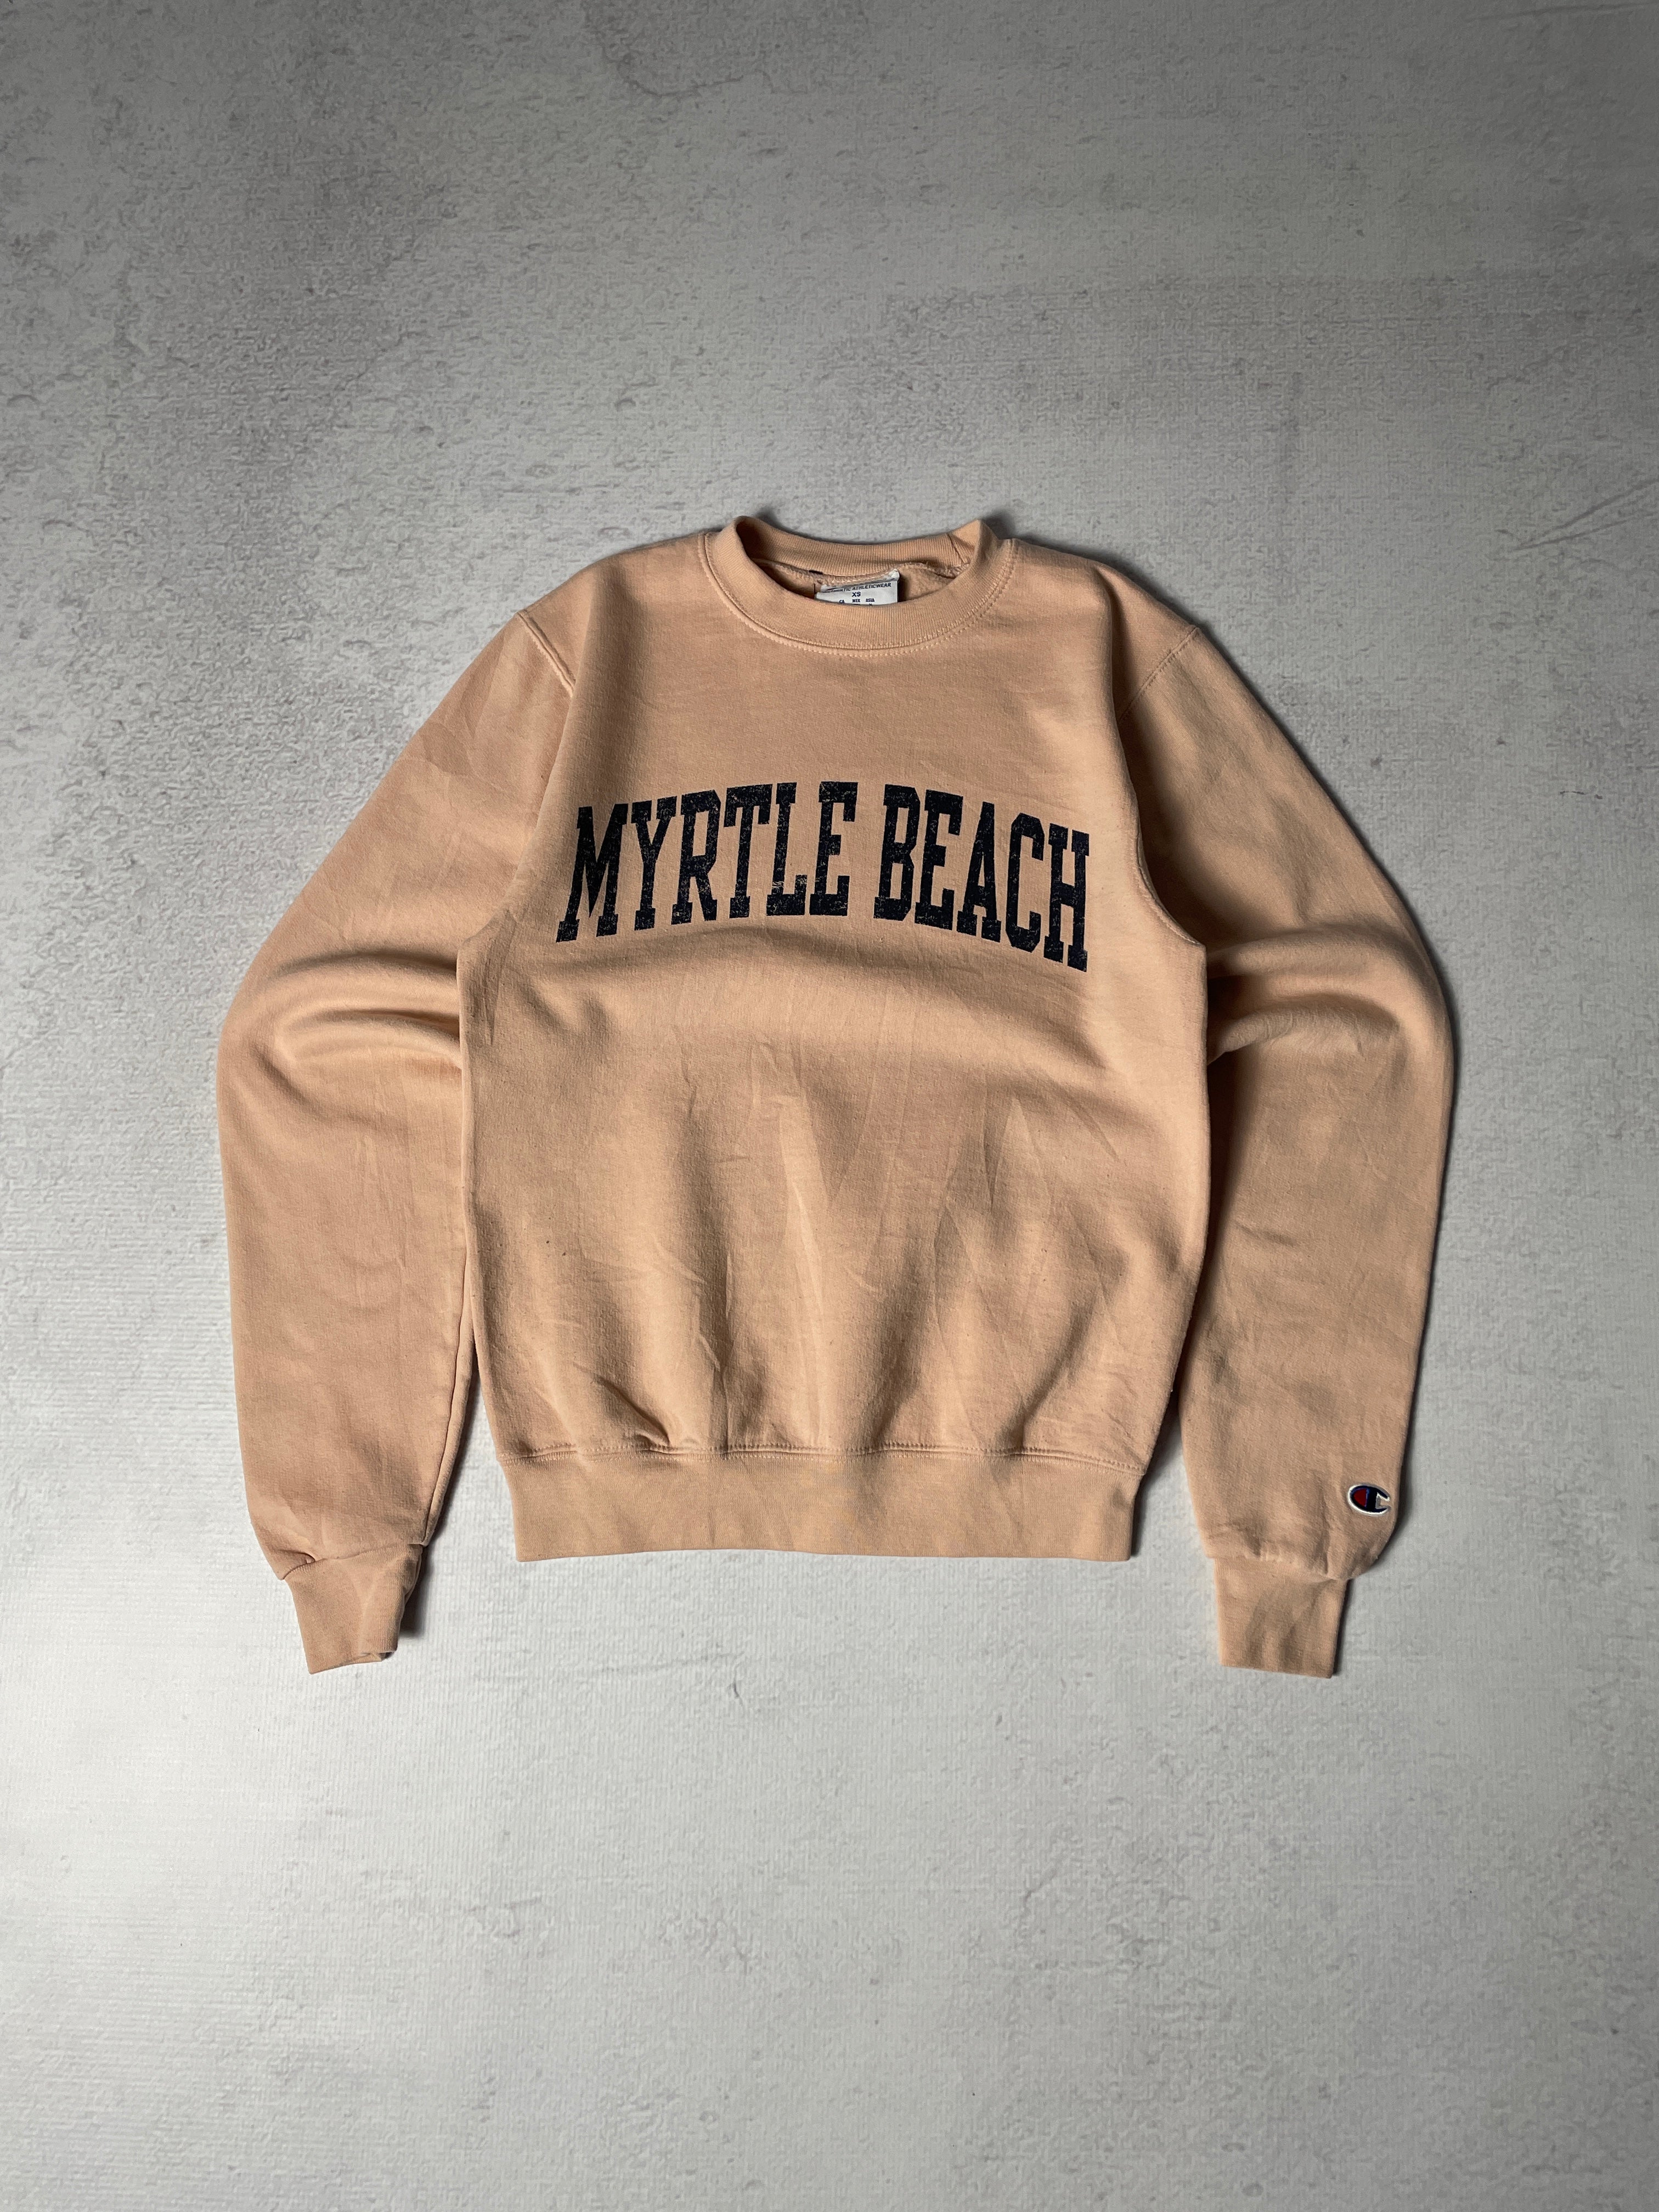 Vintage Champion Myrtle Beach Crewneck Sweatshirt - Women's Small